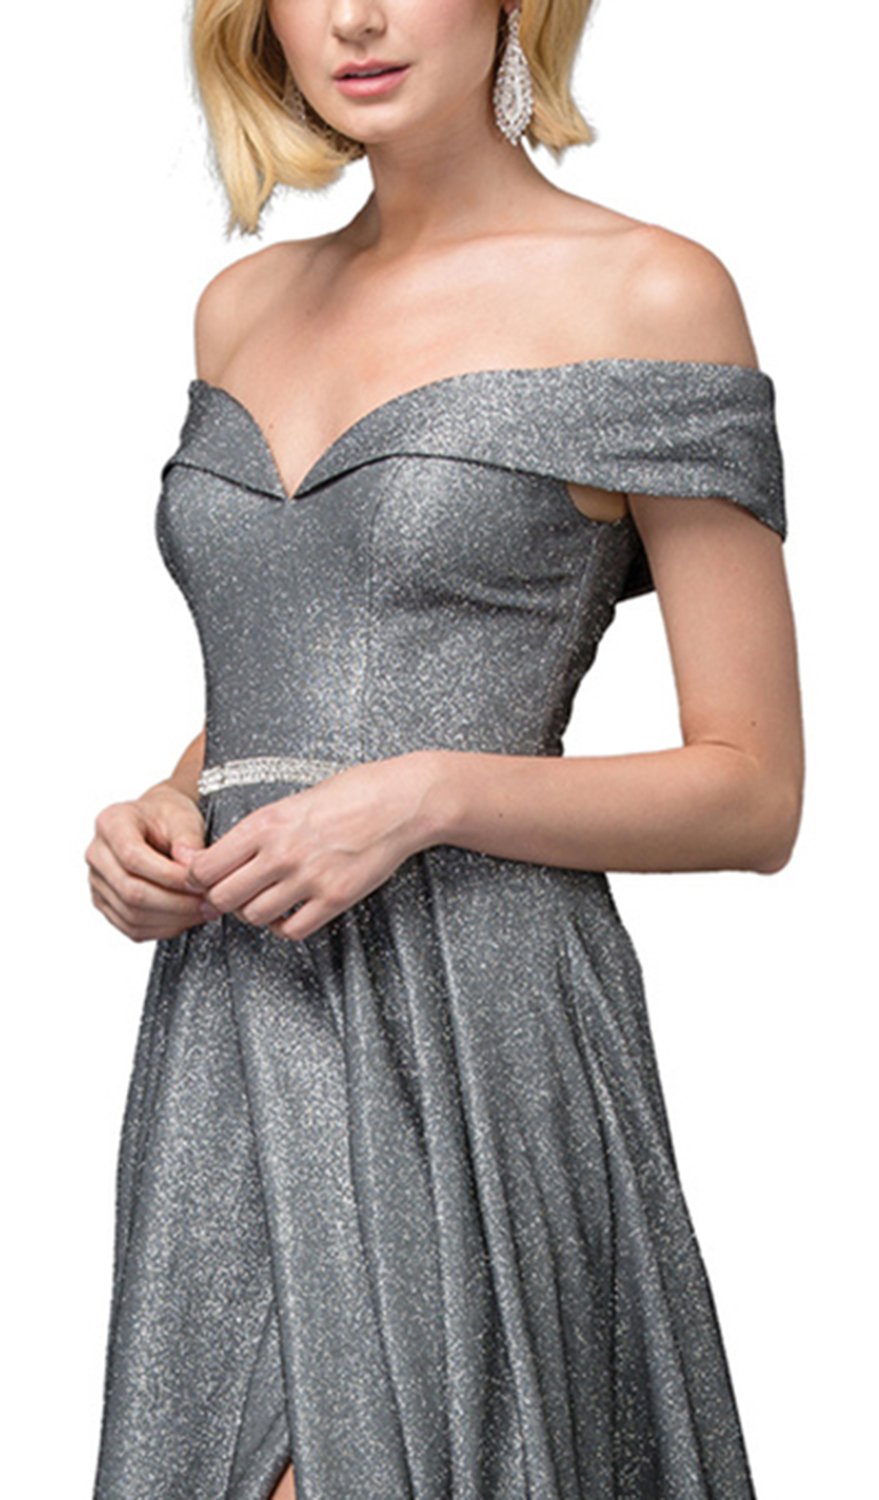 Dancing Queen - 2824 Iridescent Off Shoulder Gown with High Slit In Gray